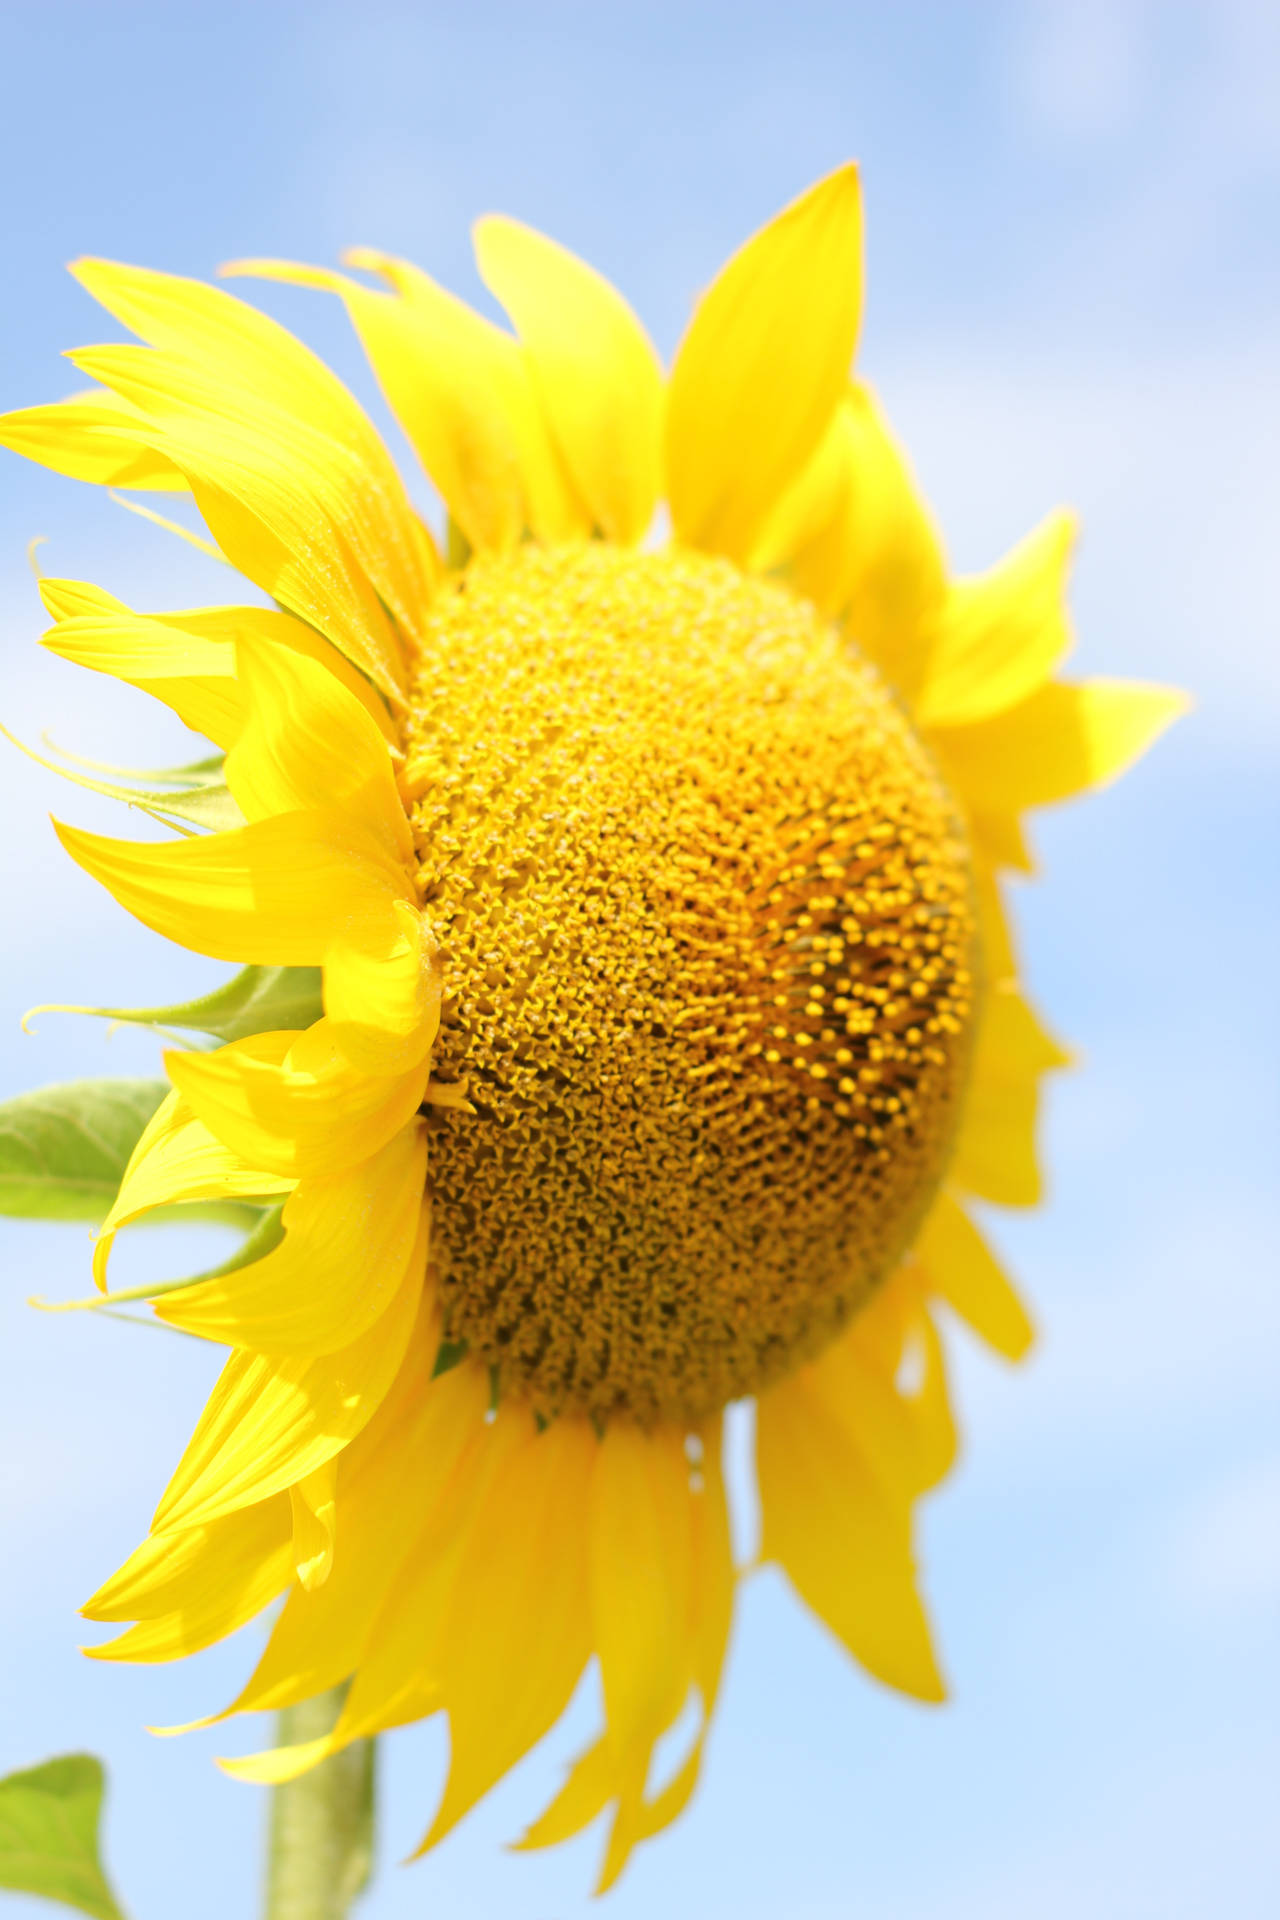 Sunflower 4k Iphone 6 Plus Background